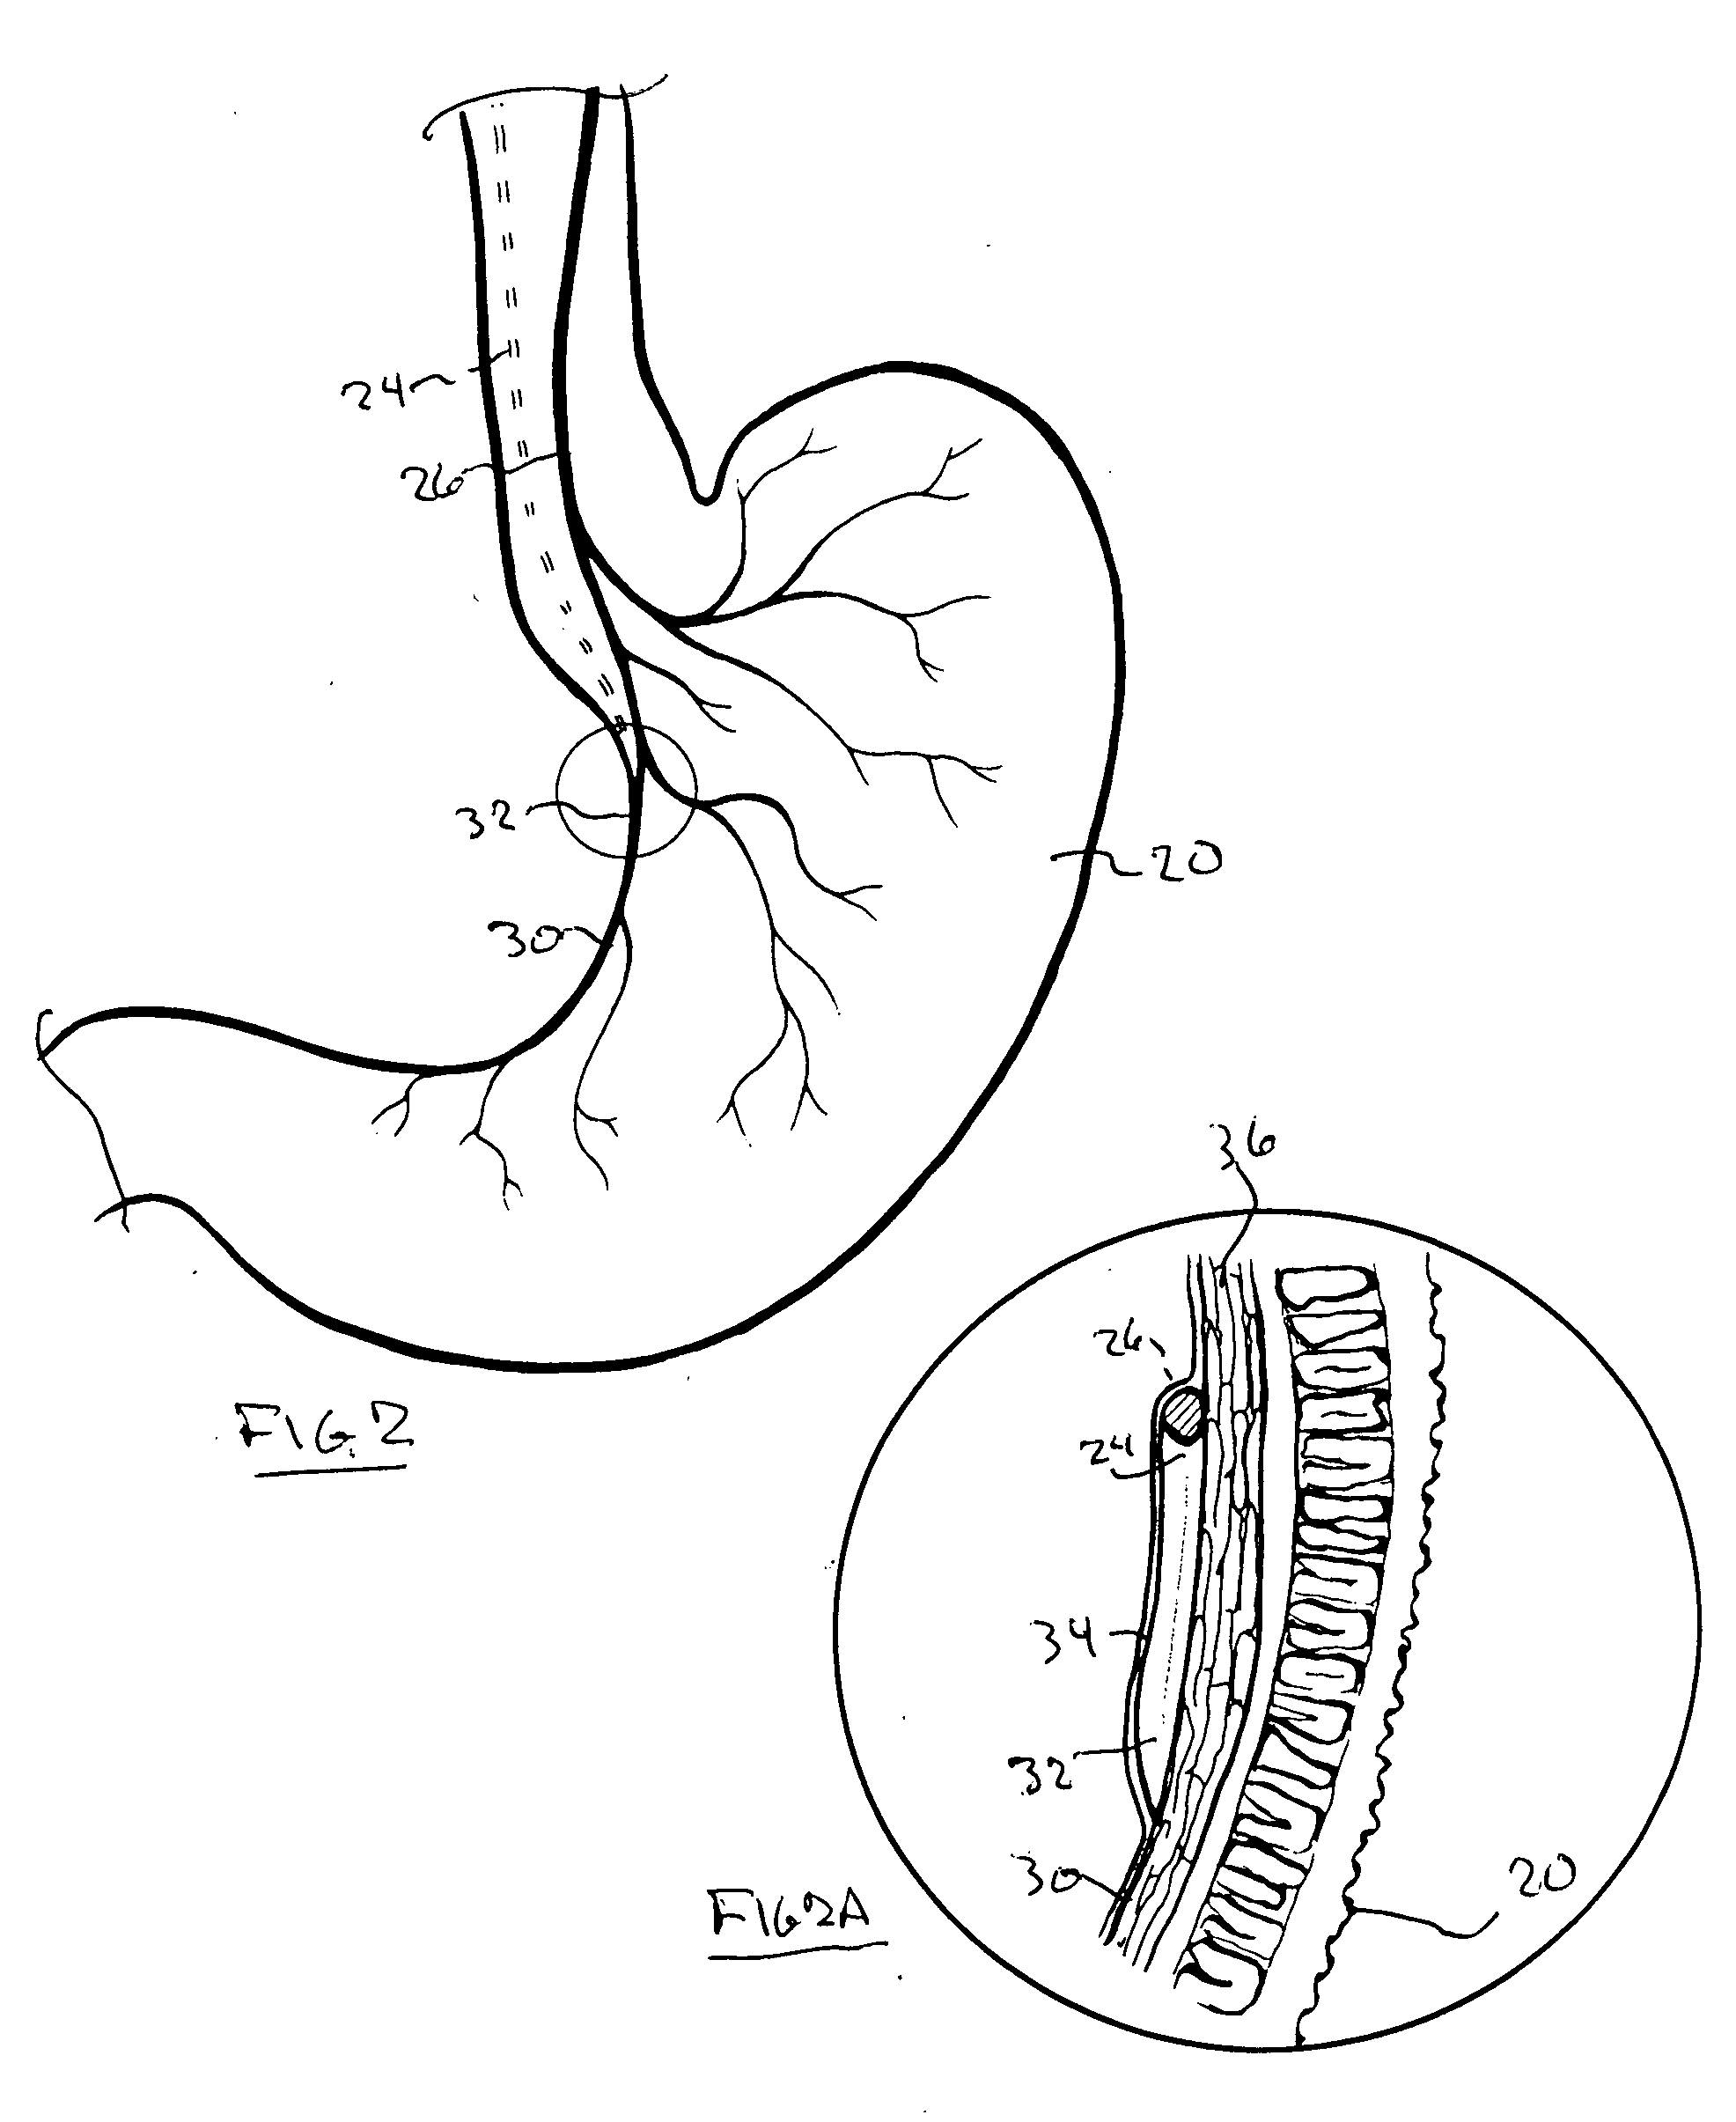 Vagal nerve bulking arrangement